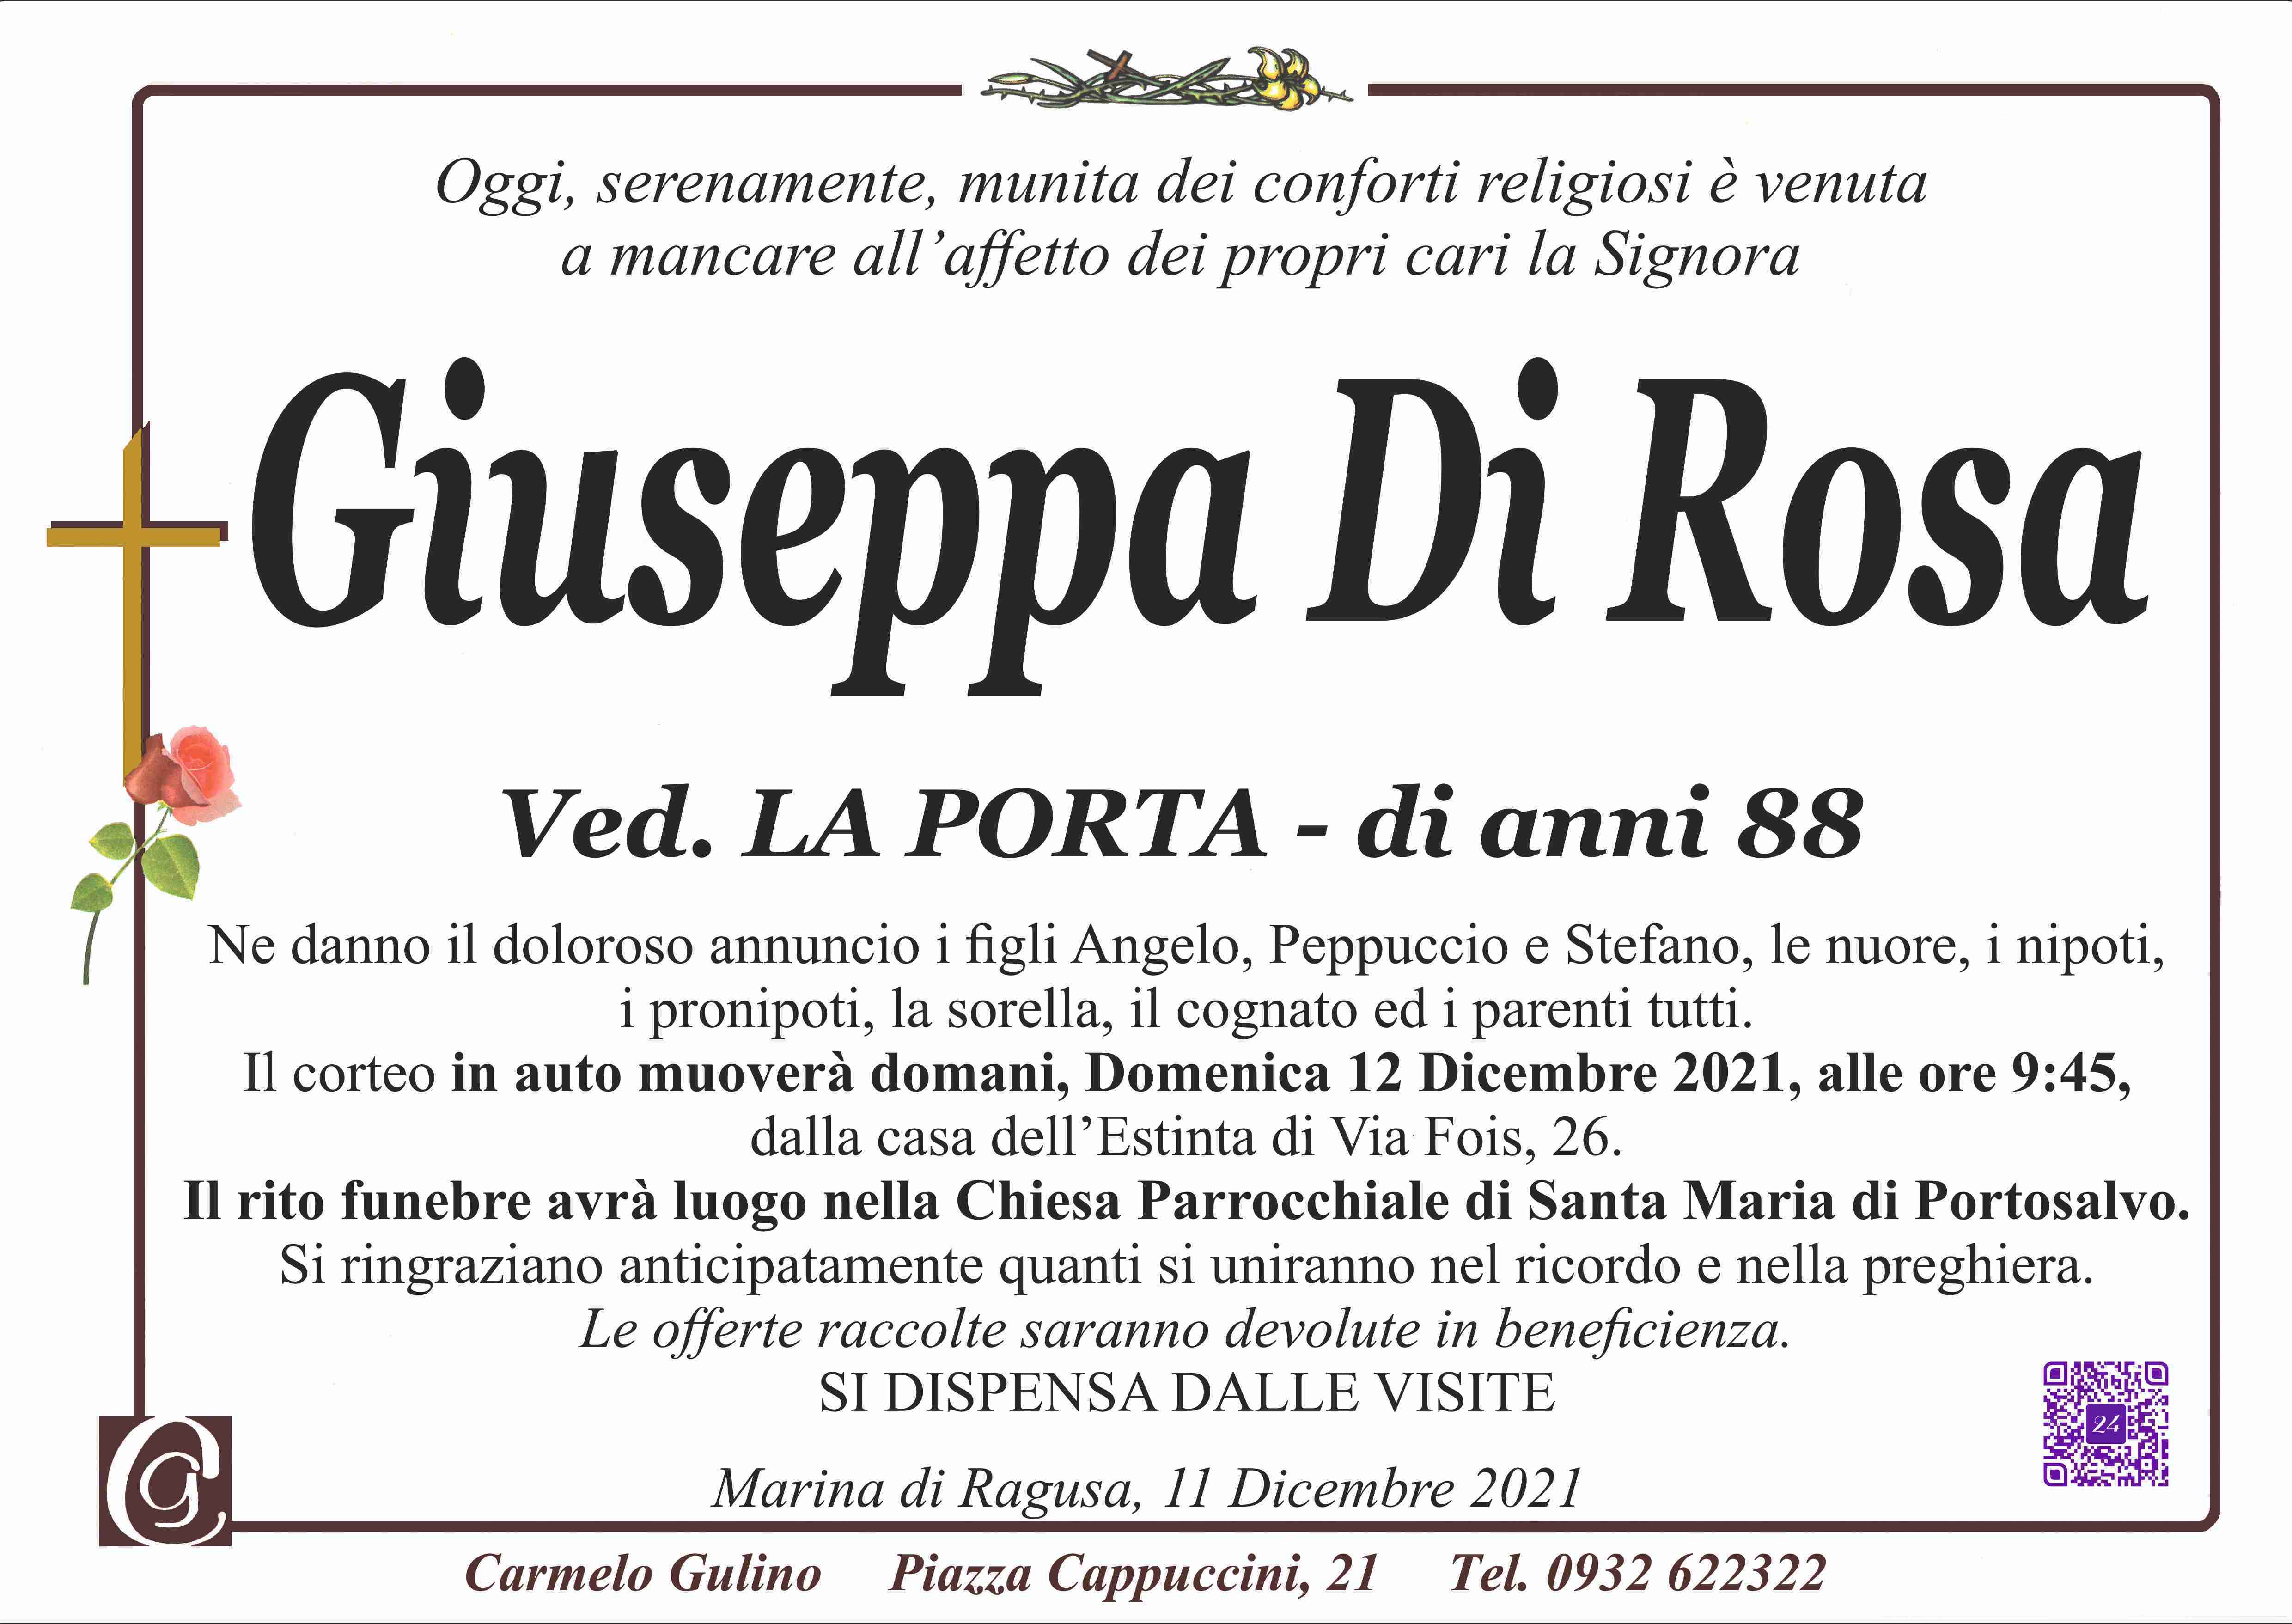 Giuseppa Di Rosa